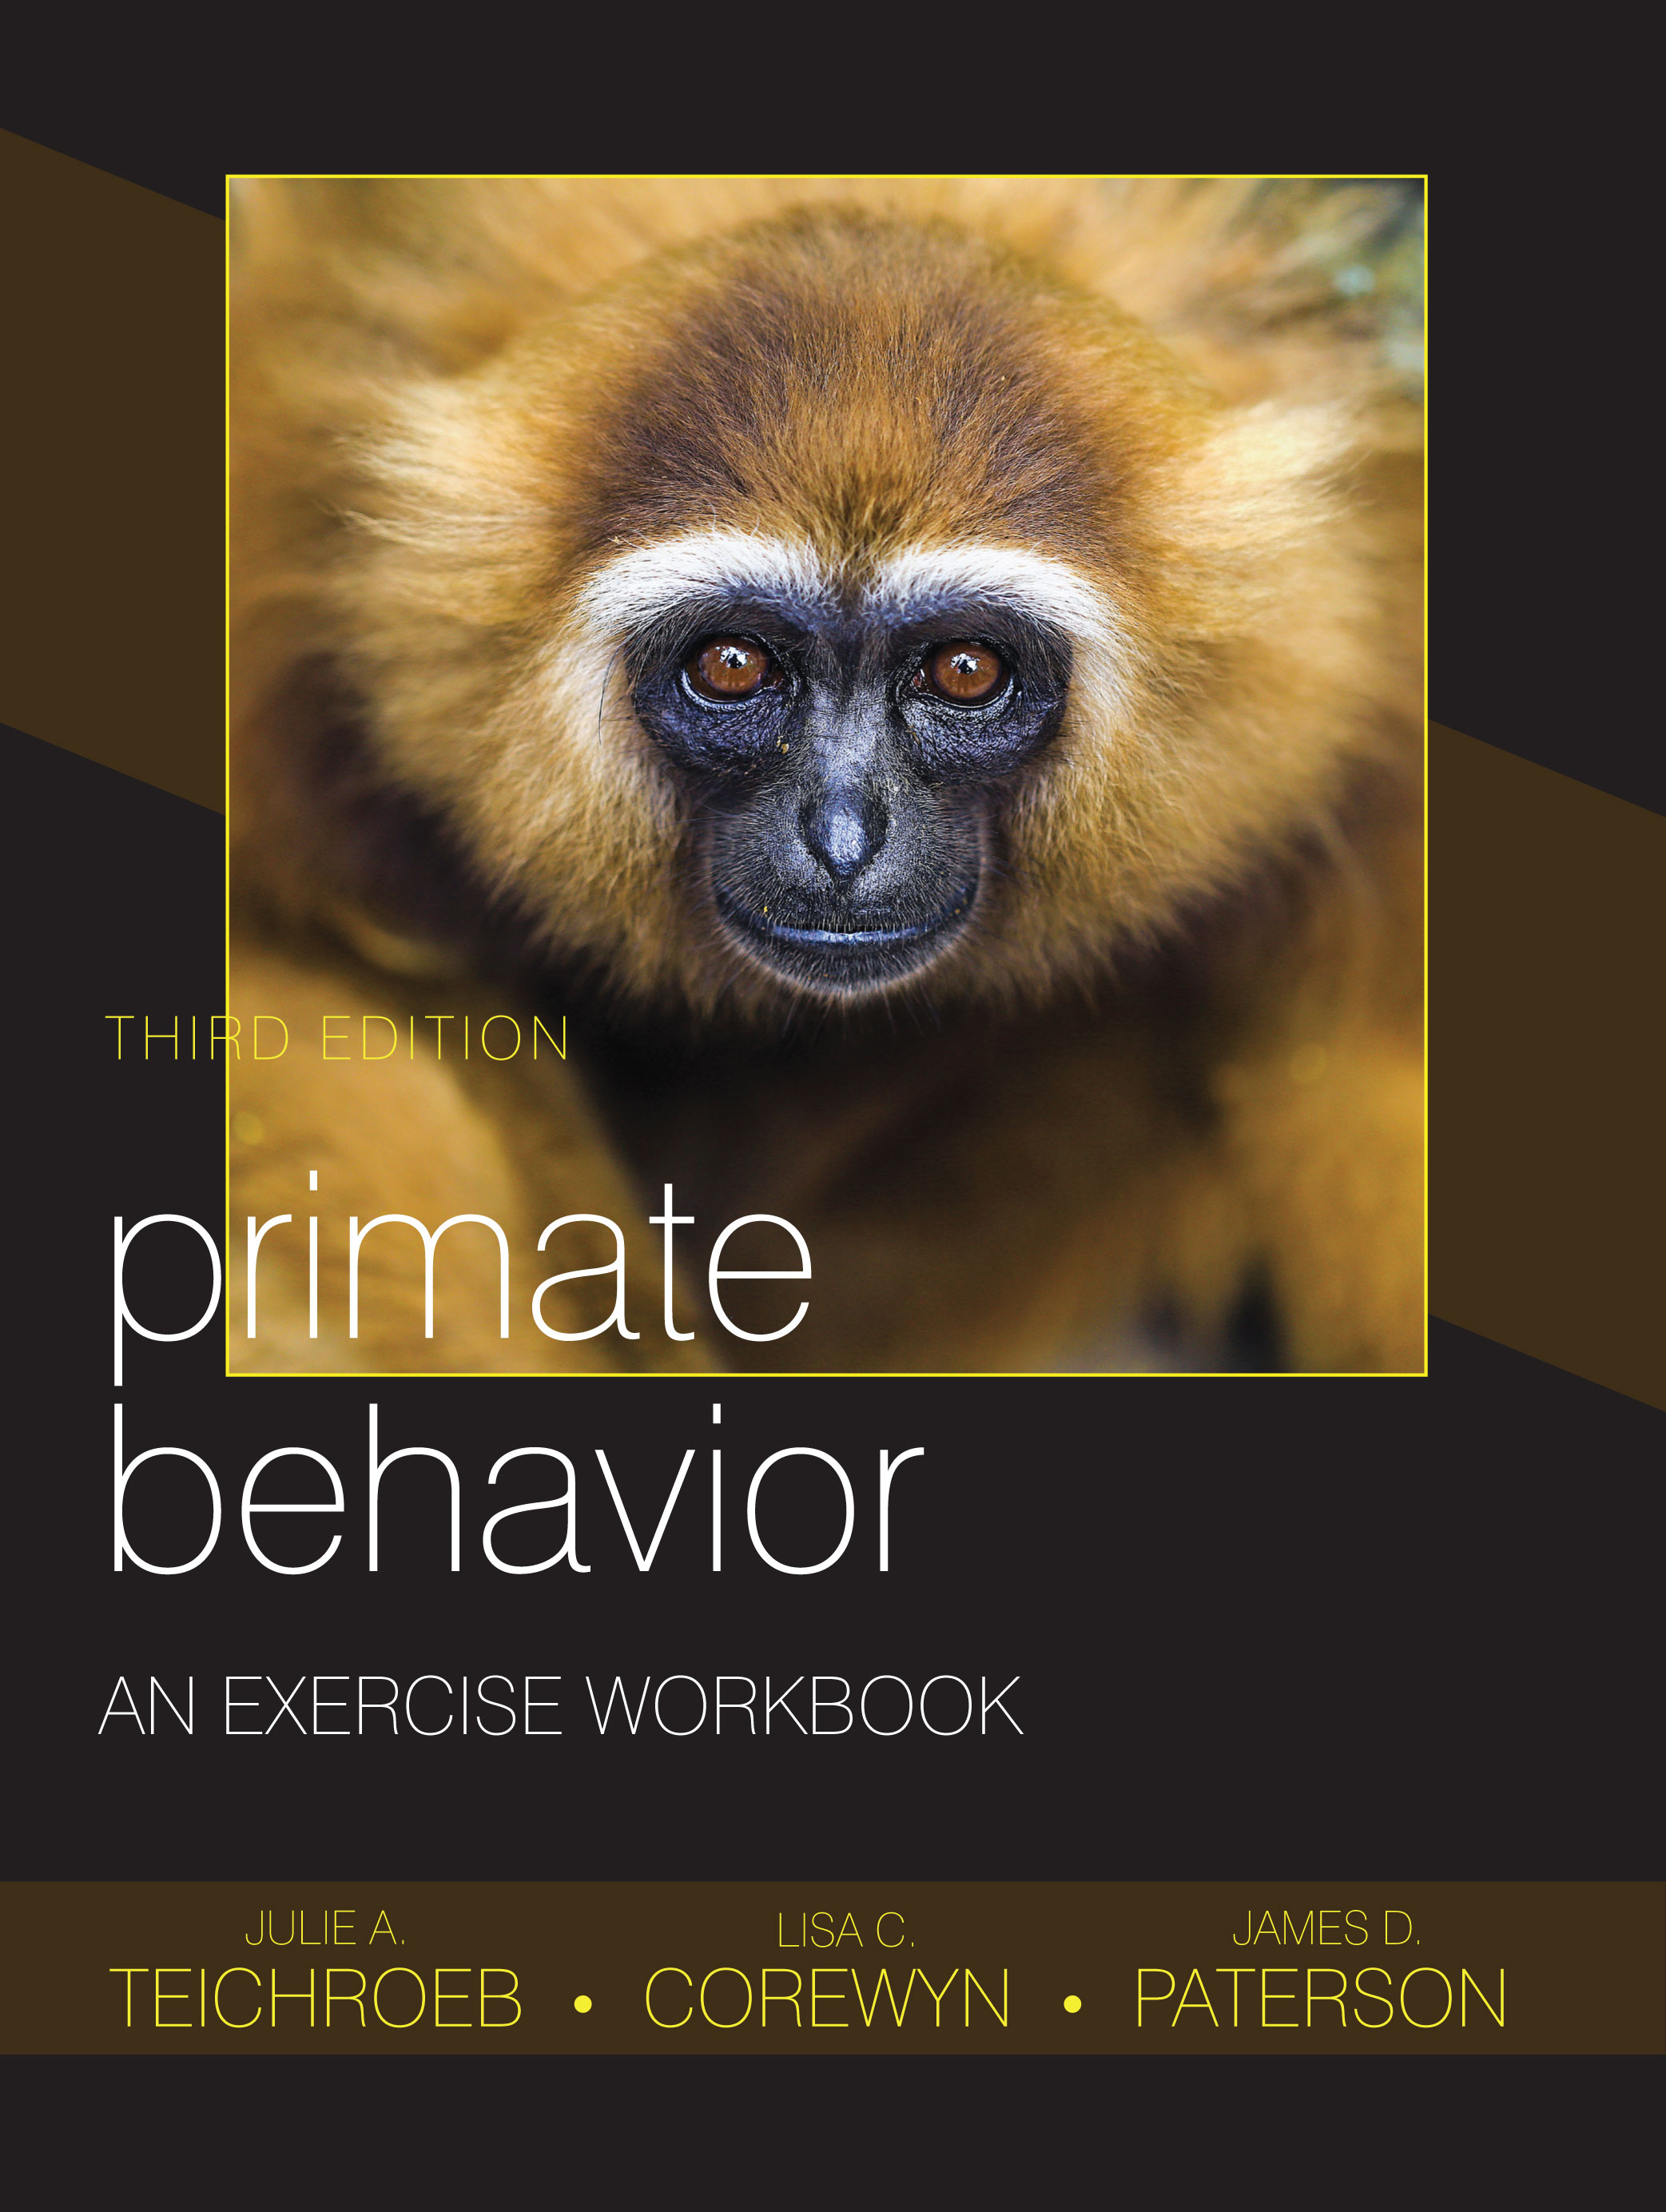 Primate Behavior: An Exercise Workbook by Julie A. Teichroeb, Lisa C. Corewyn, James D. Paterson